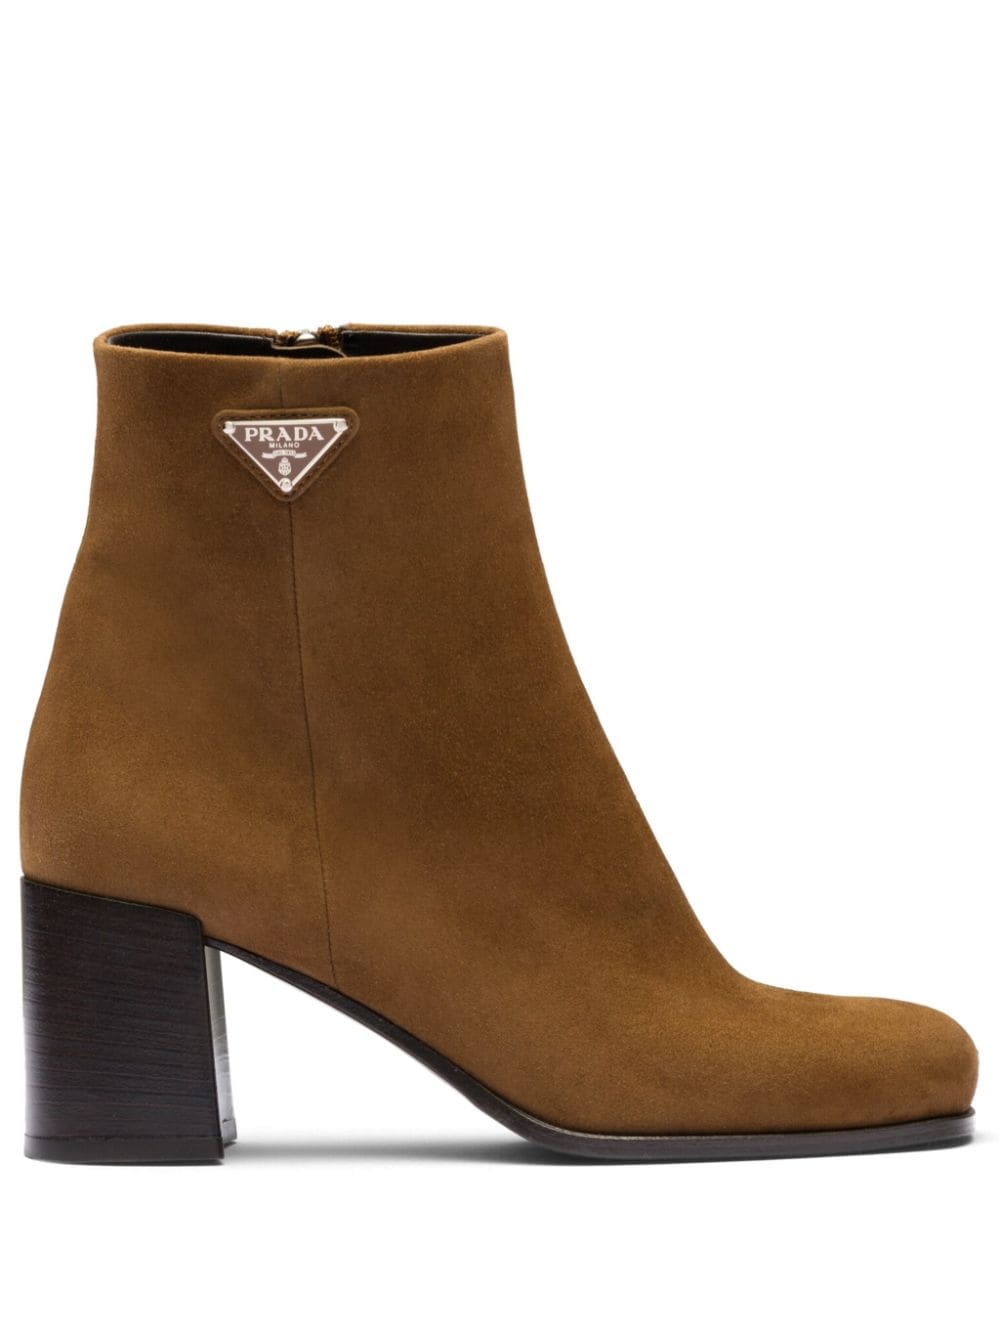 Prada triangle-logo suede boots - Brown